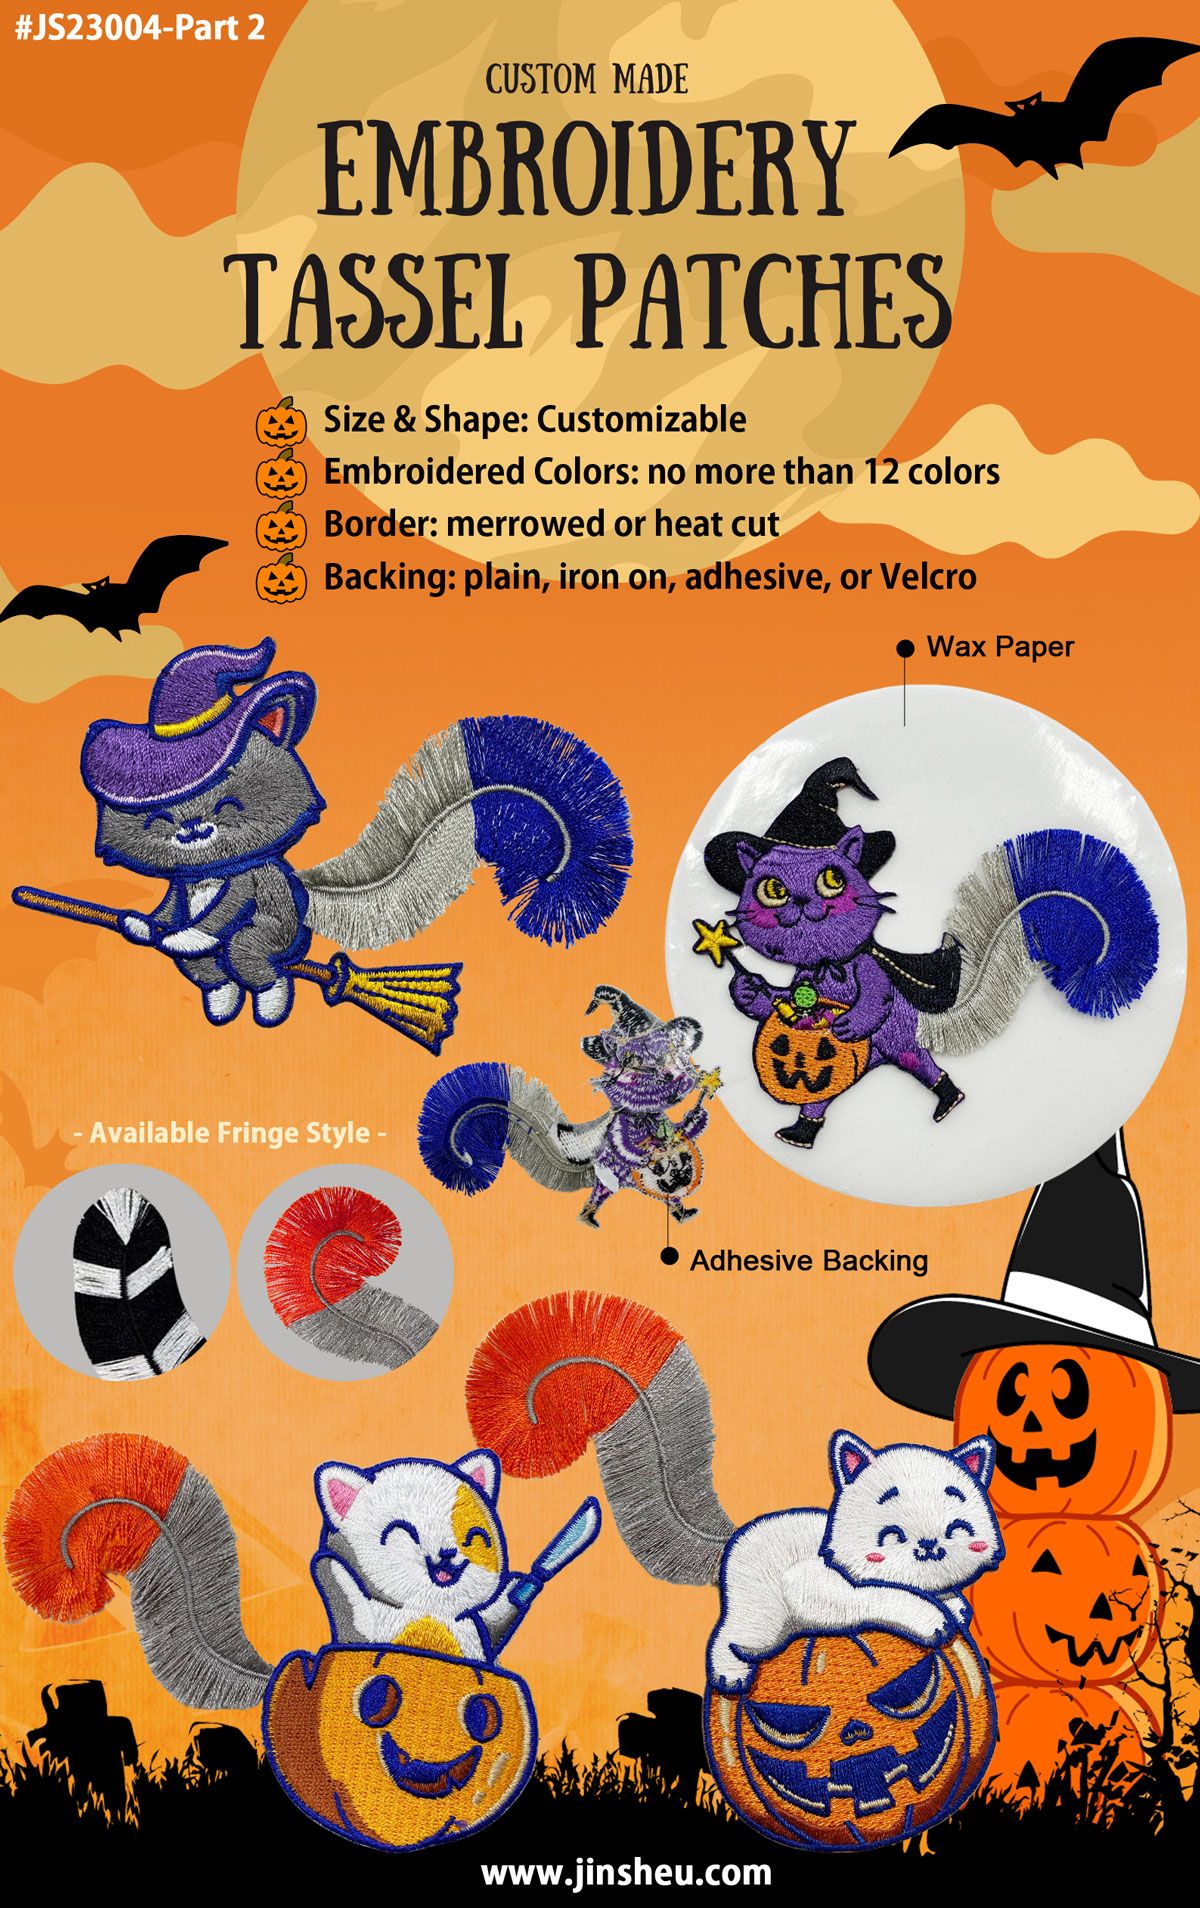 patchs de broderie d'Halloween personnalisés en gros